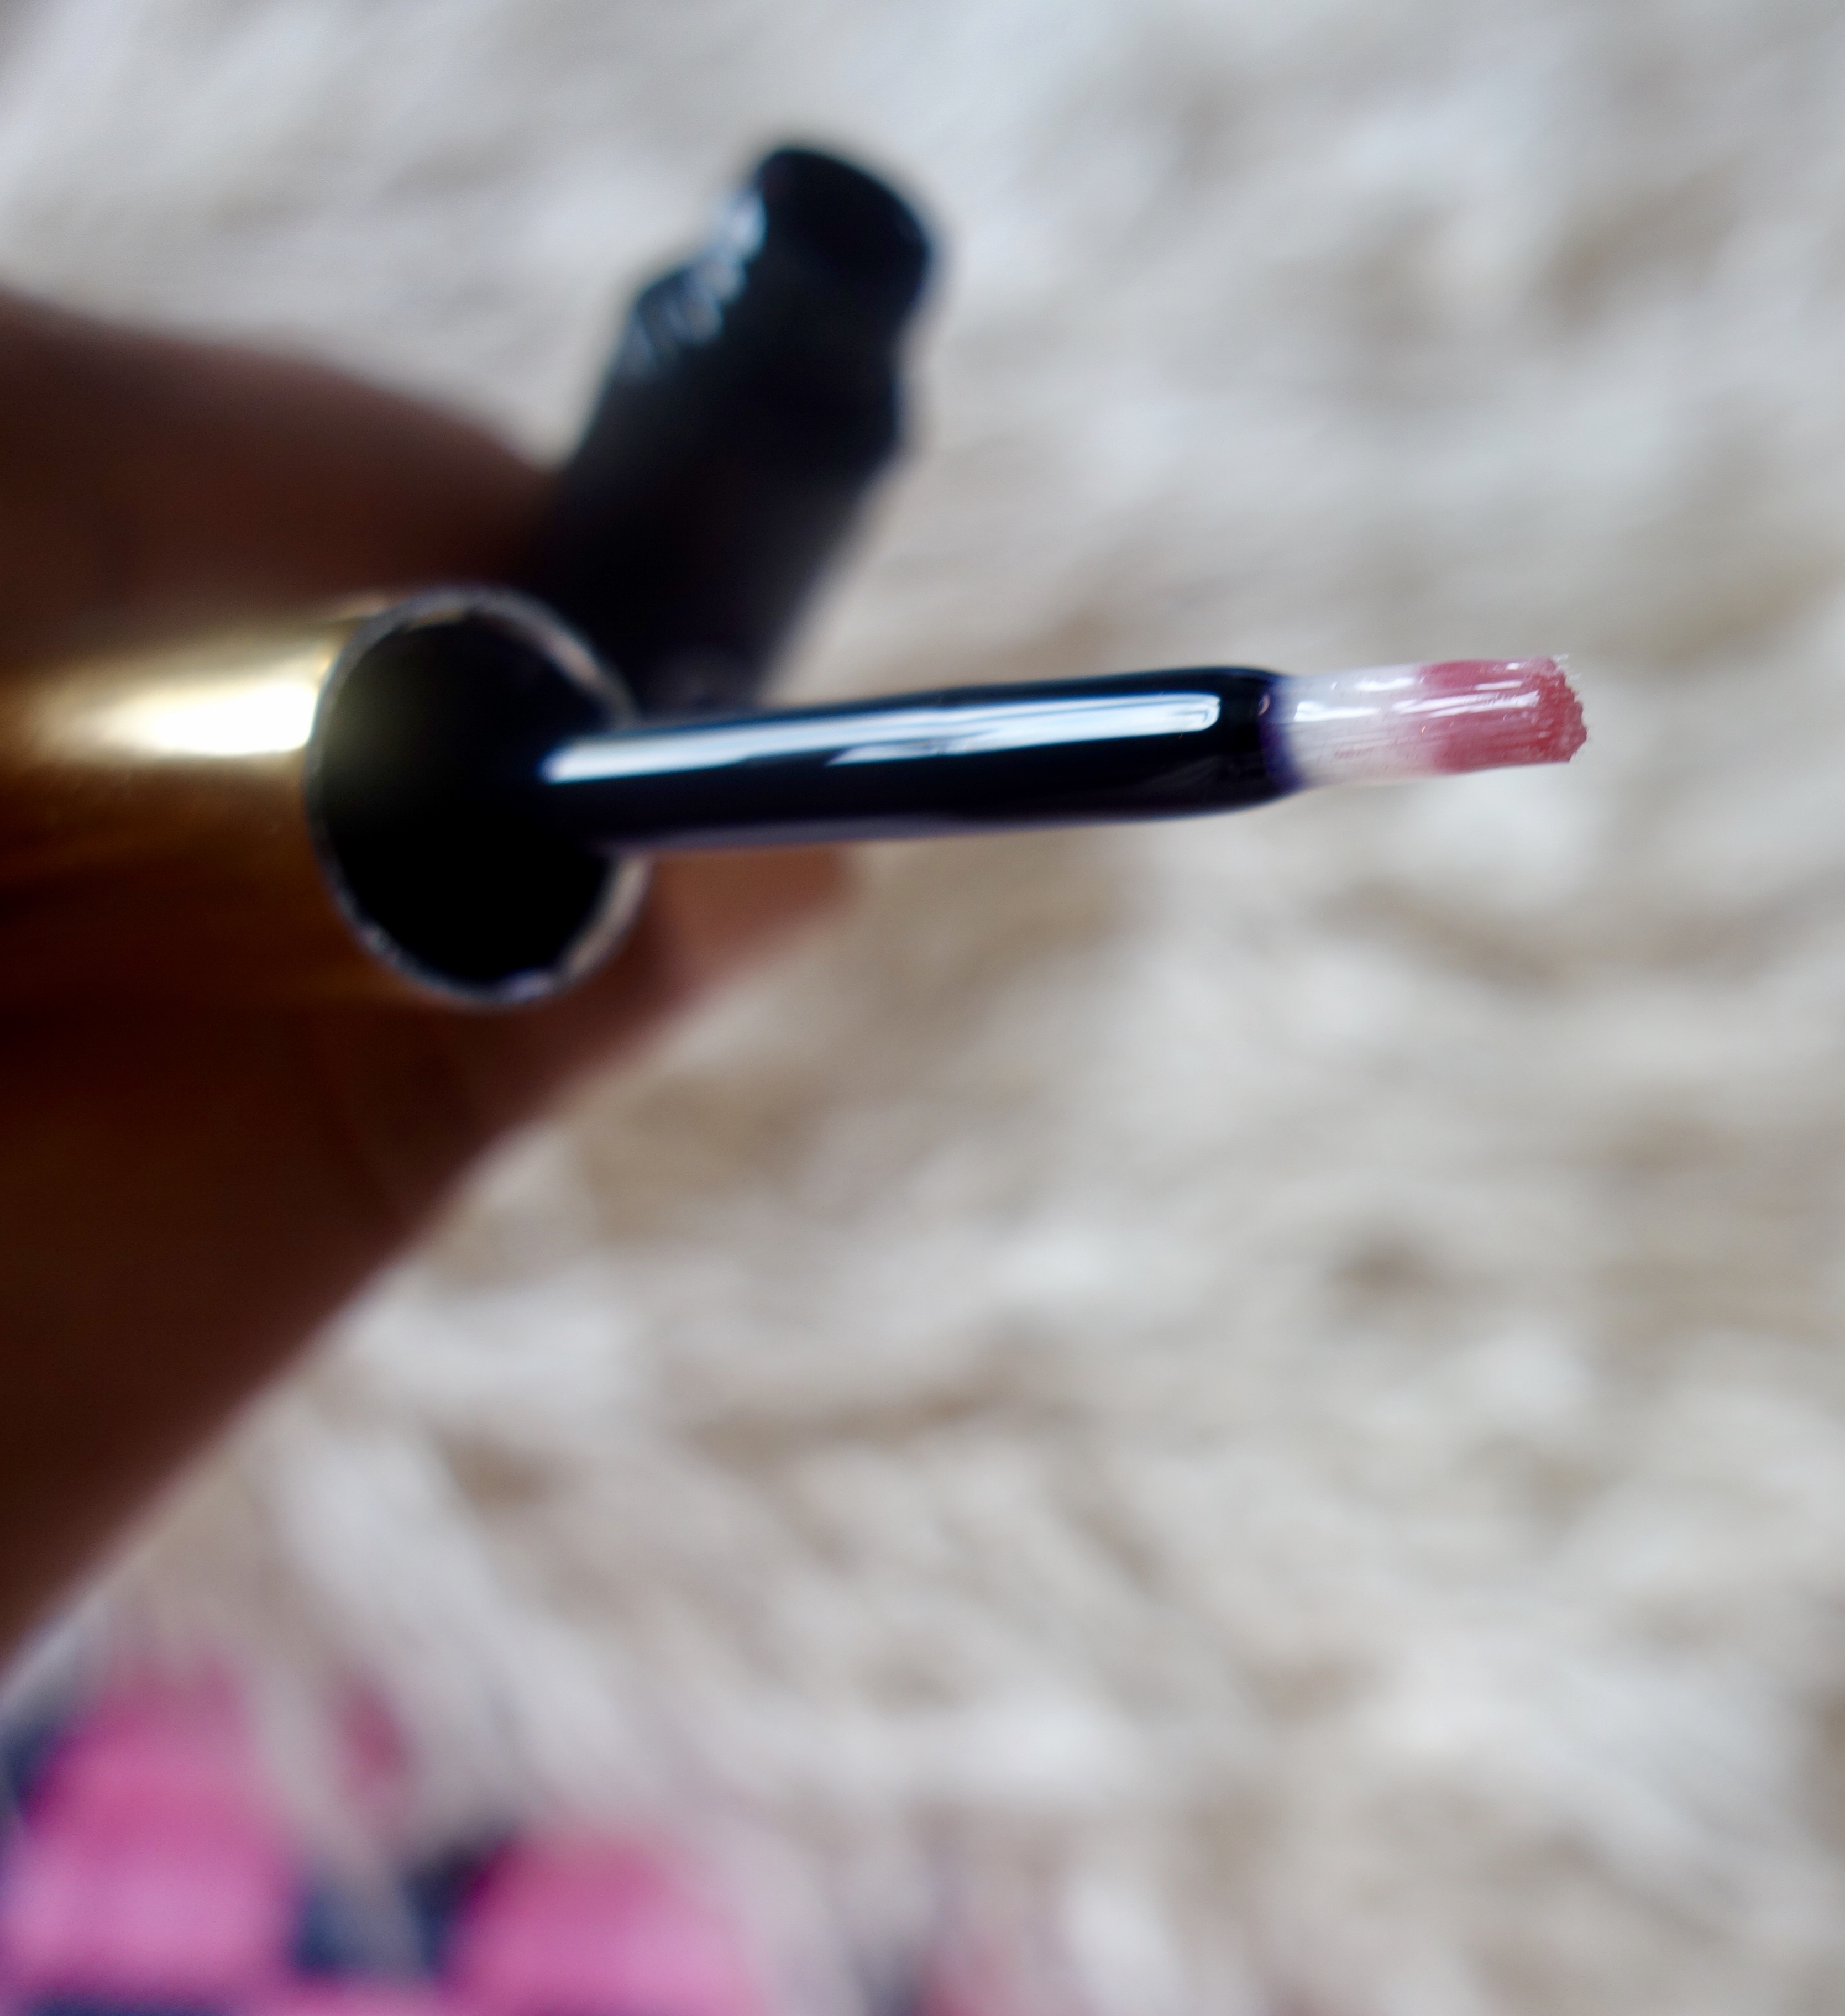 Review: Chanel Rouge Double Intensité Ultra Wear Lip Colour In